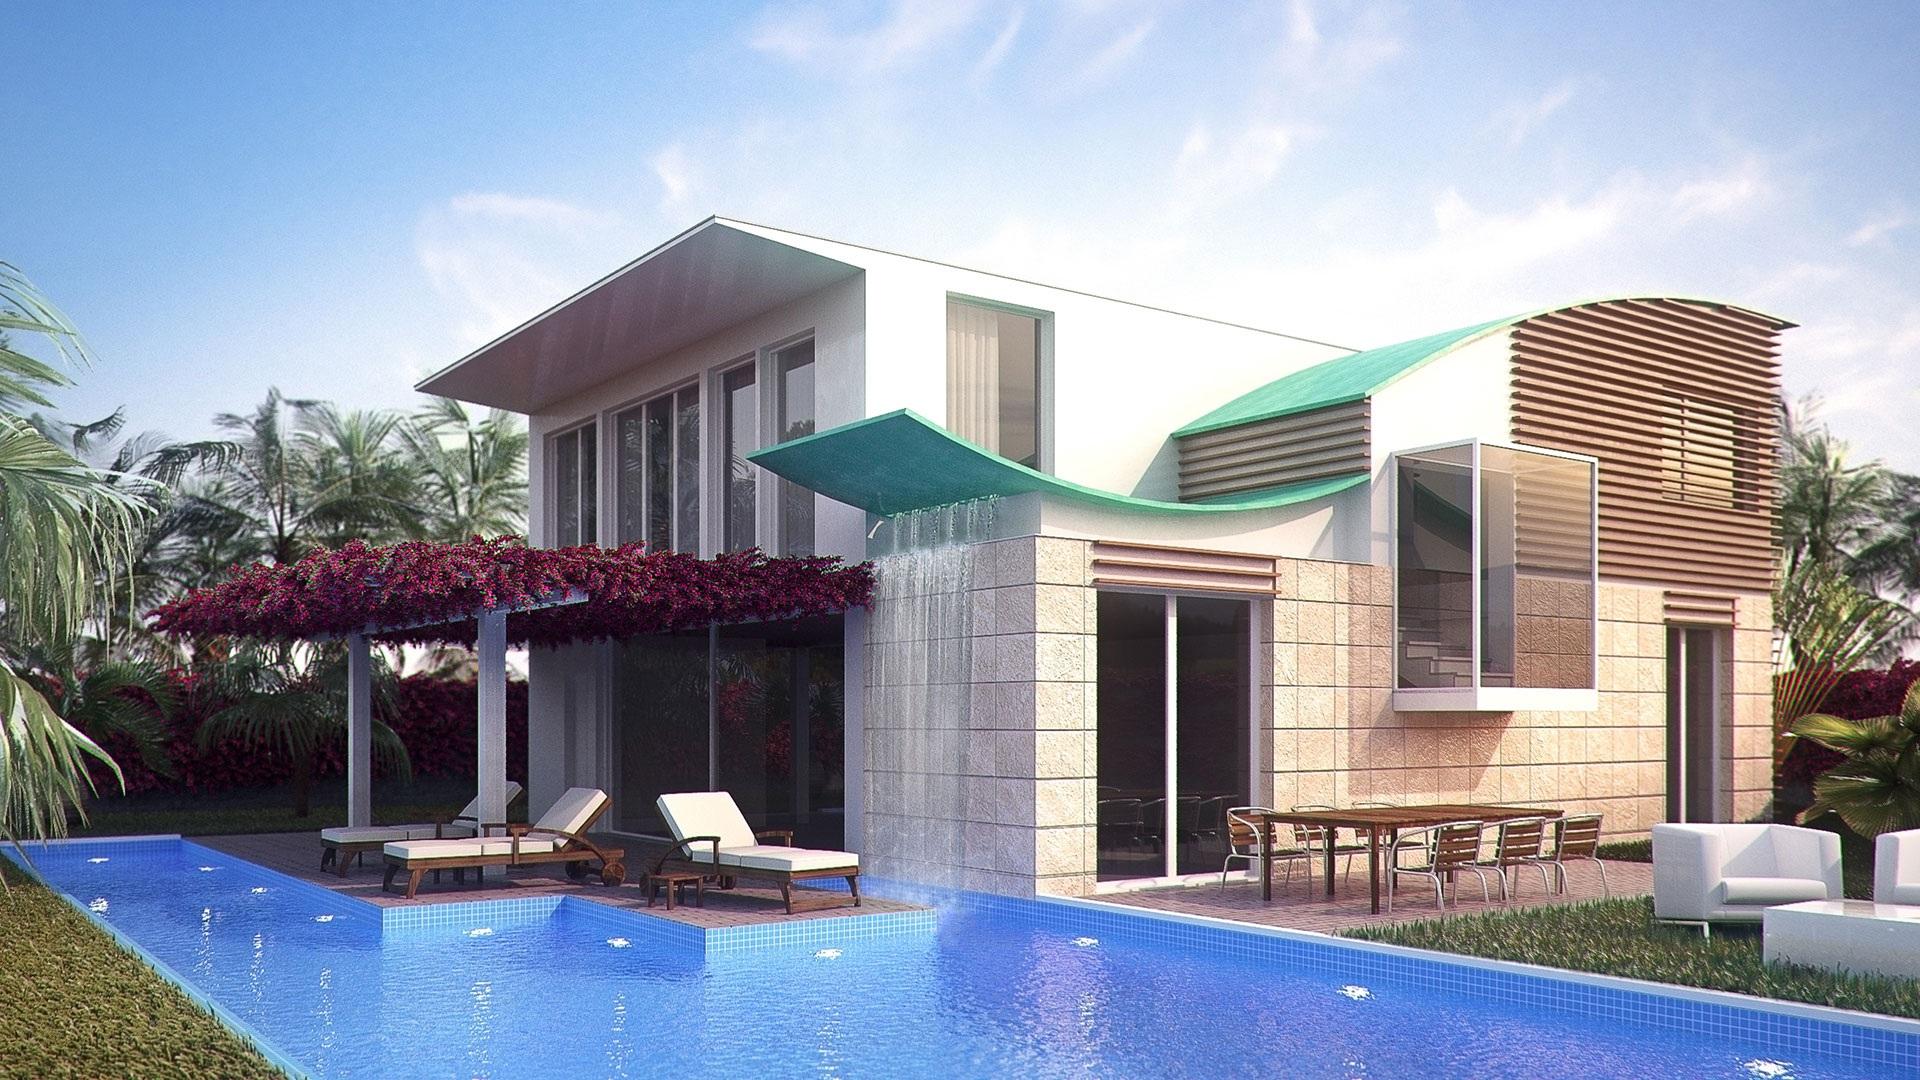 Cayman Isle BallenIsles Homes For Sale in Palm Beach Gardens